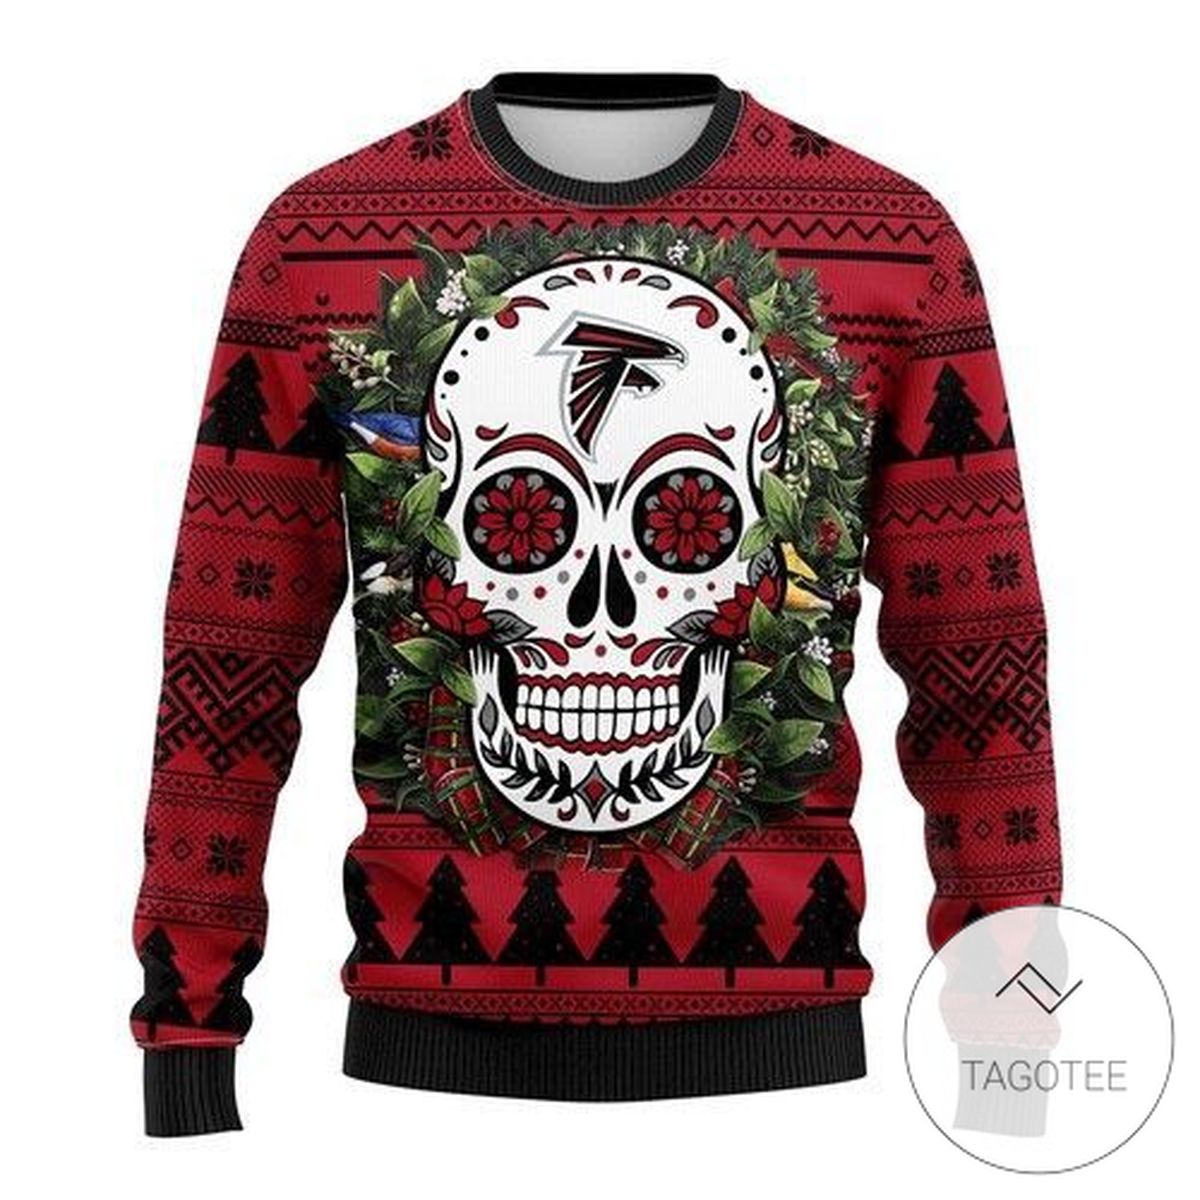 Atlanta Falcons Skull Flower Sweatshirt Knitted Ugly Christmas Sweater